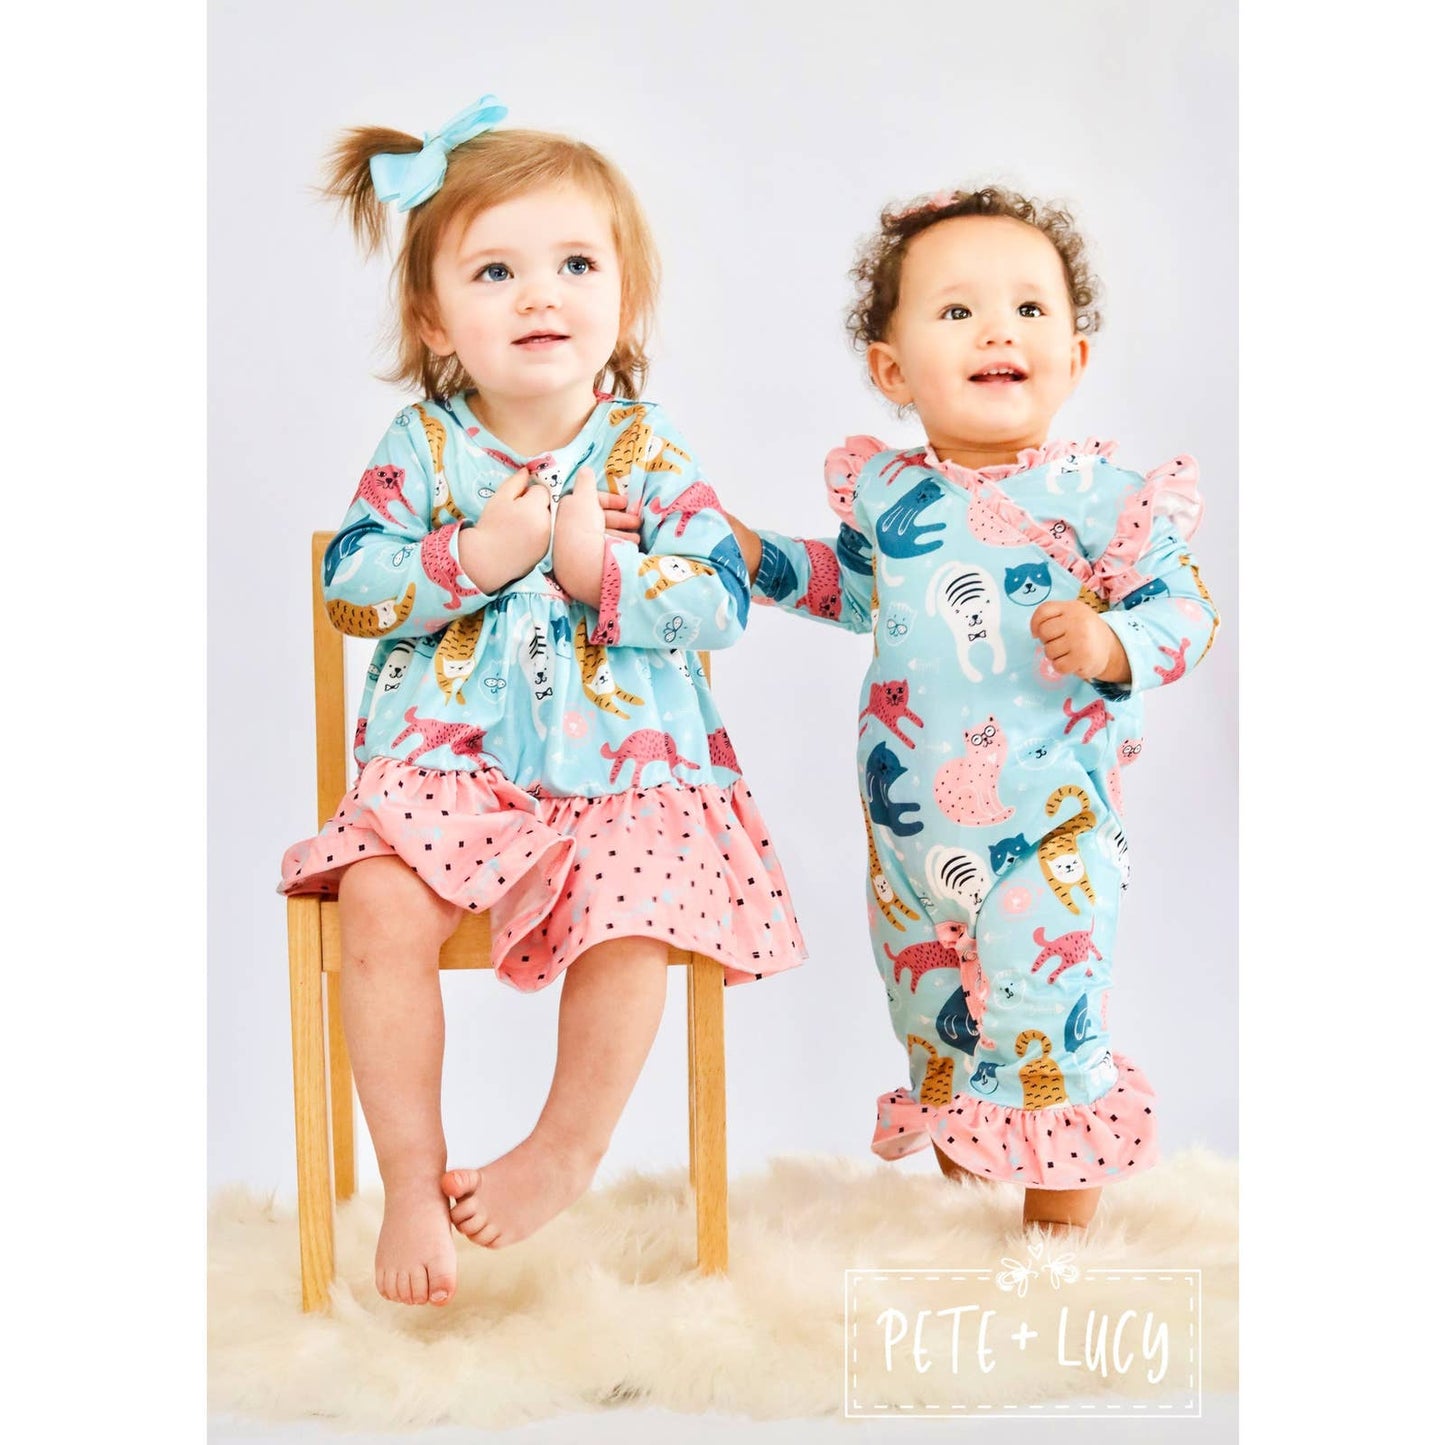 PETE + LUCY Playful Cats Teal Pink Long Sleeve Ruffle Dress